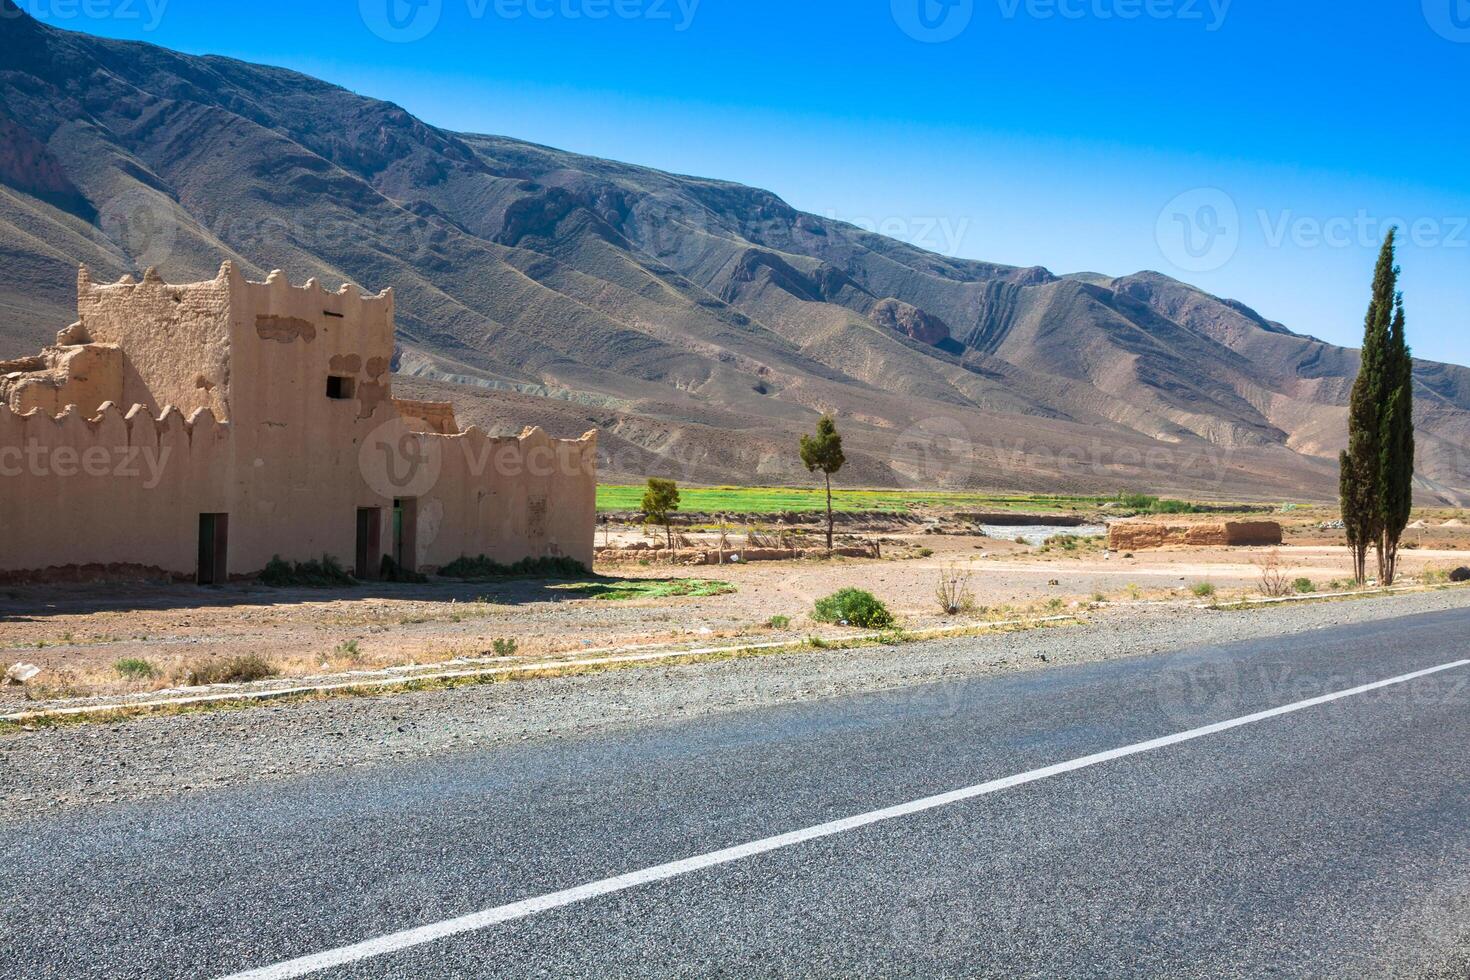 Desierto la carretera en Marruecos foto